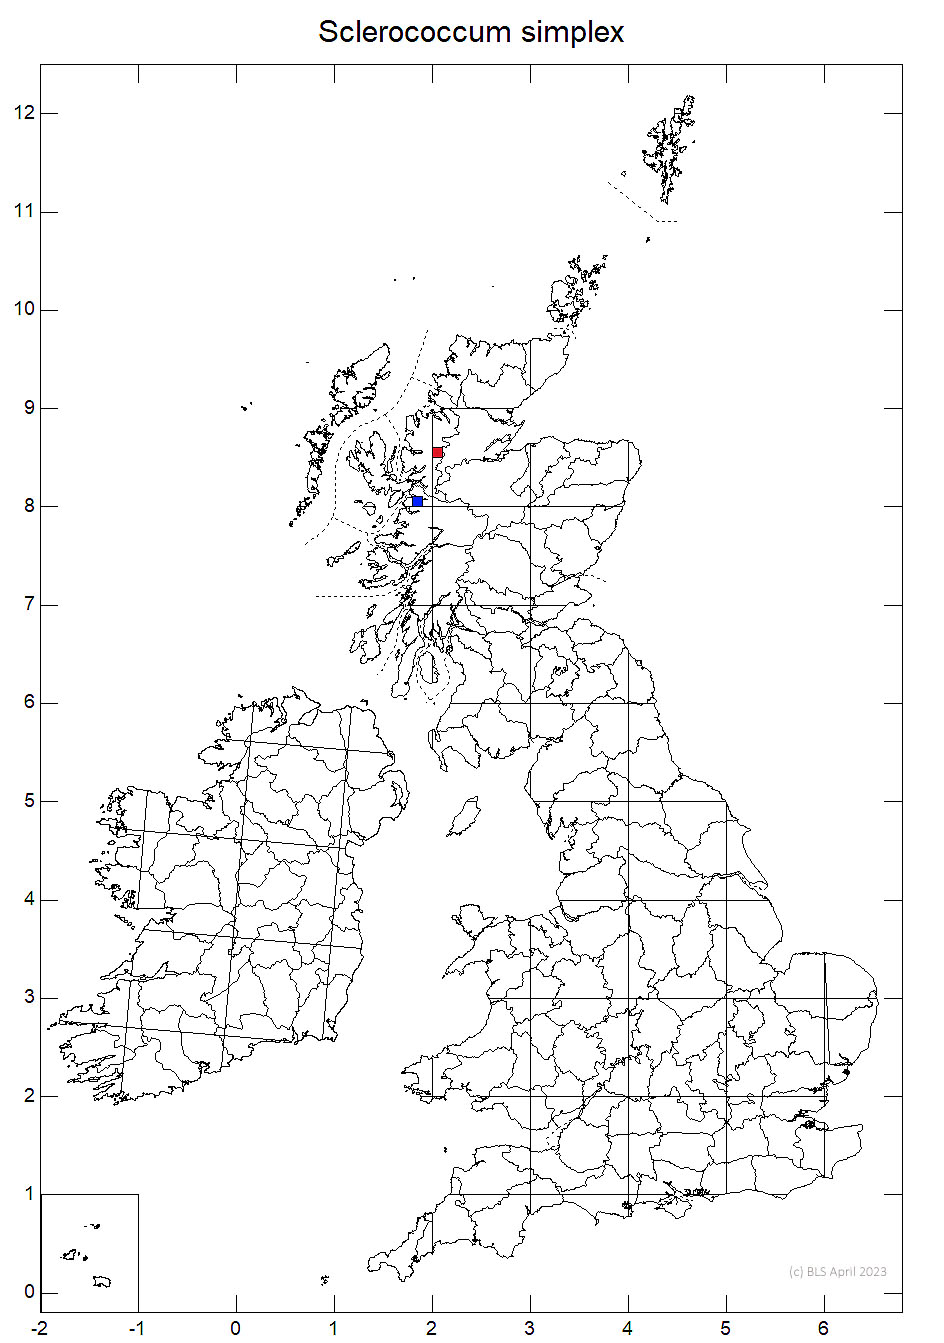 Sclerococcum simplex 10km sq distribution map